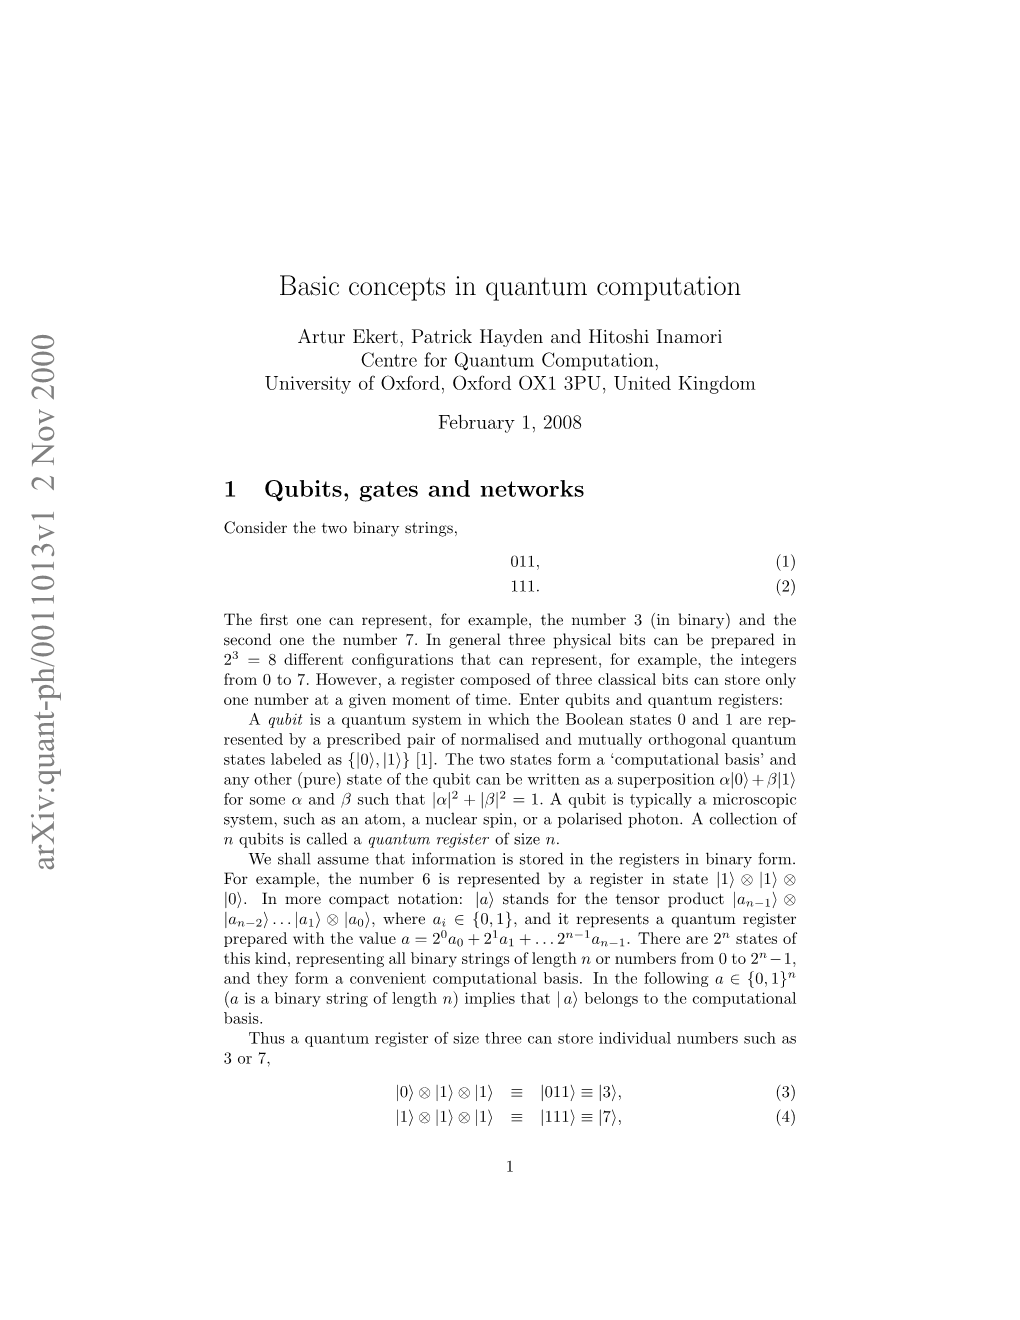 Basic Concepts in Quantum Computation